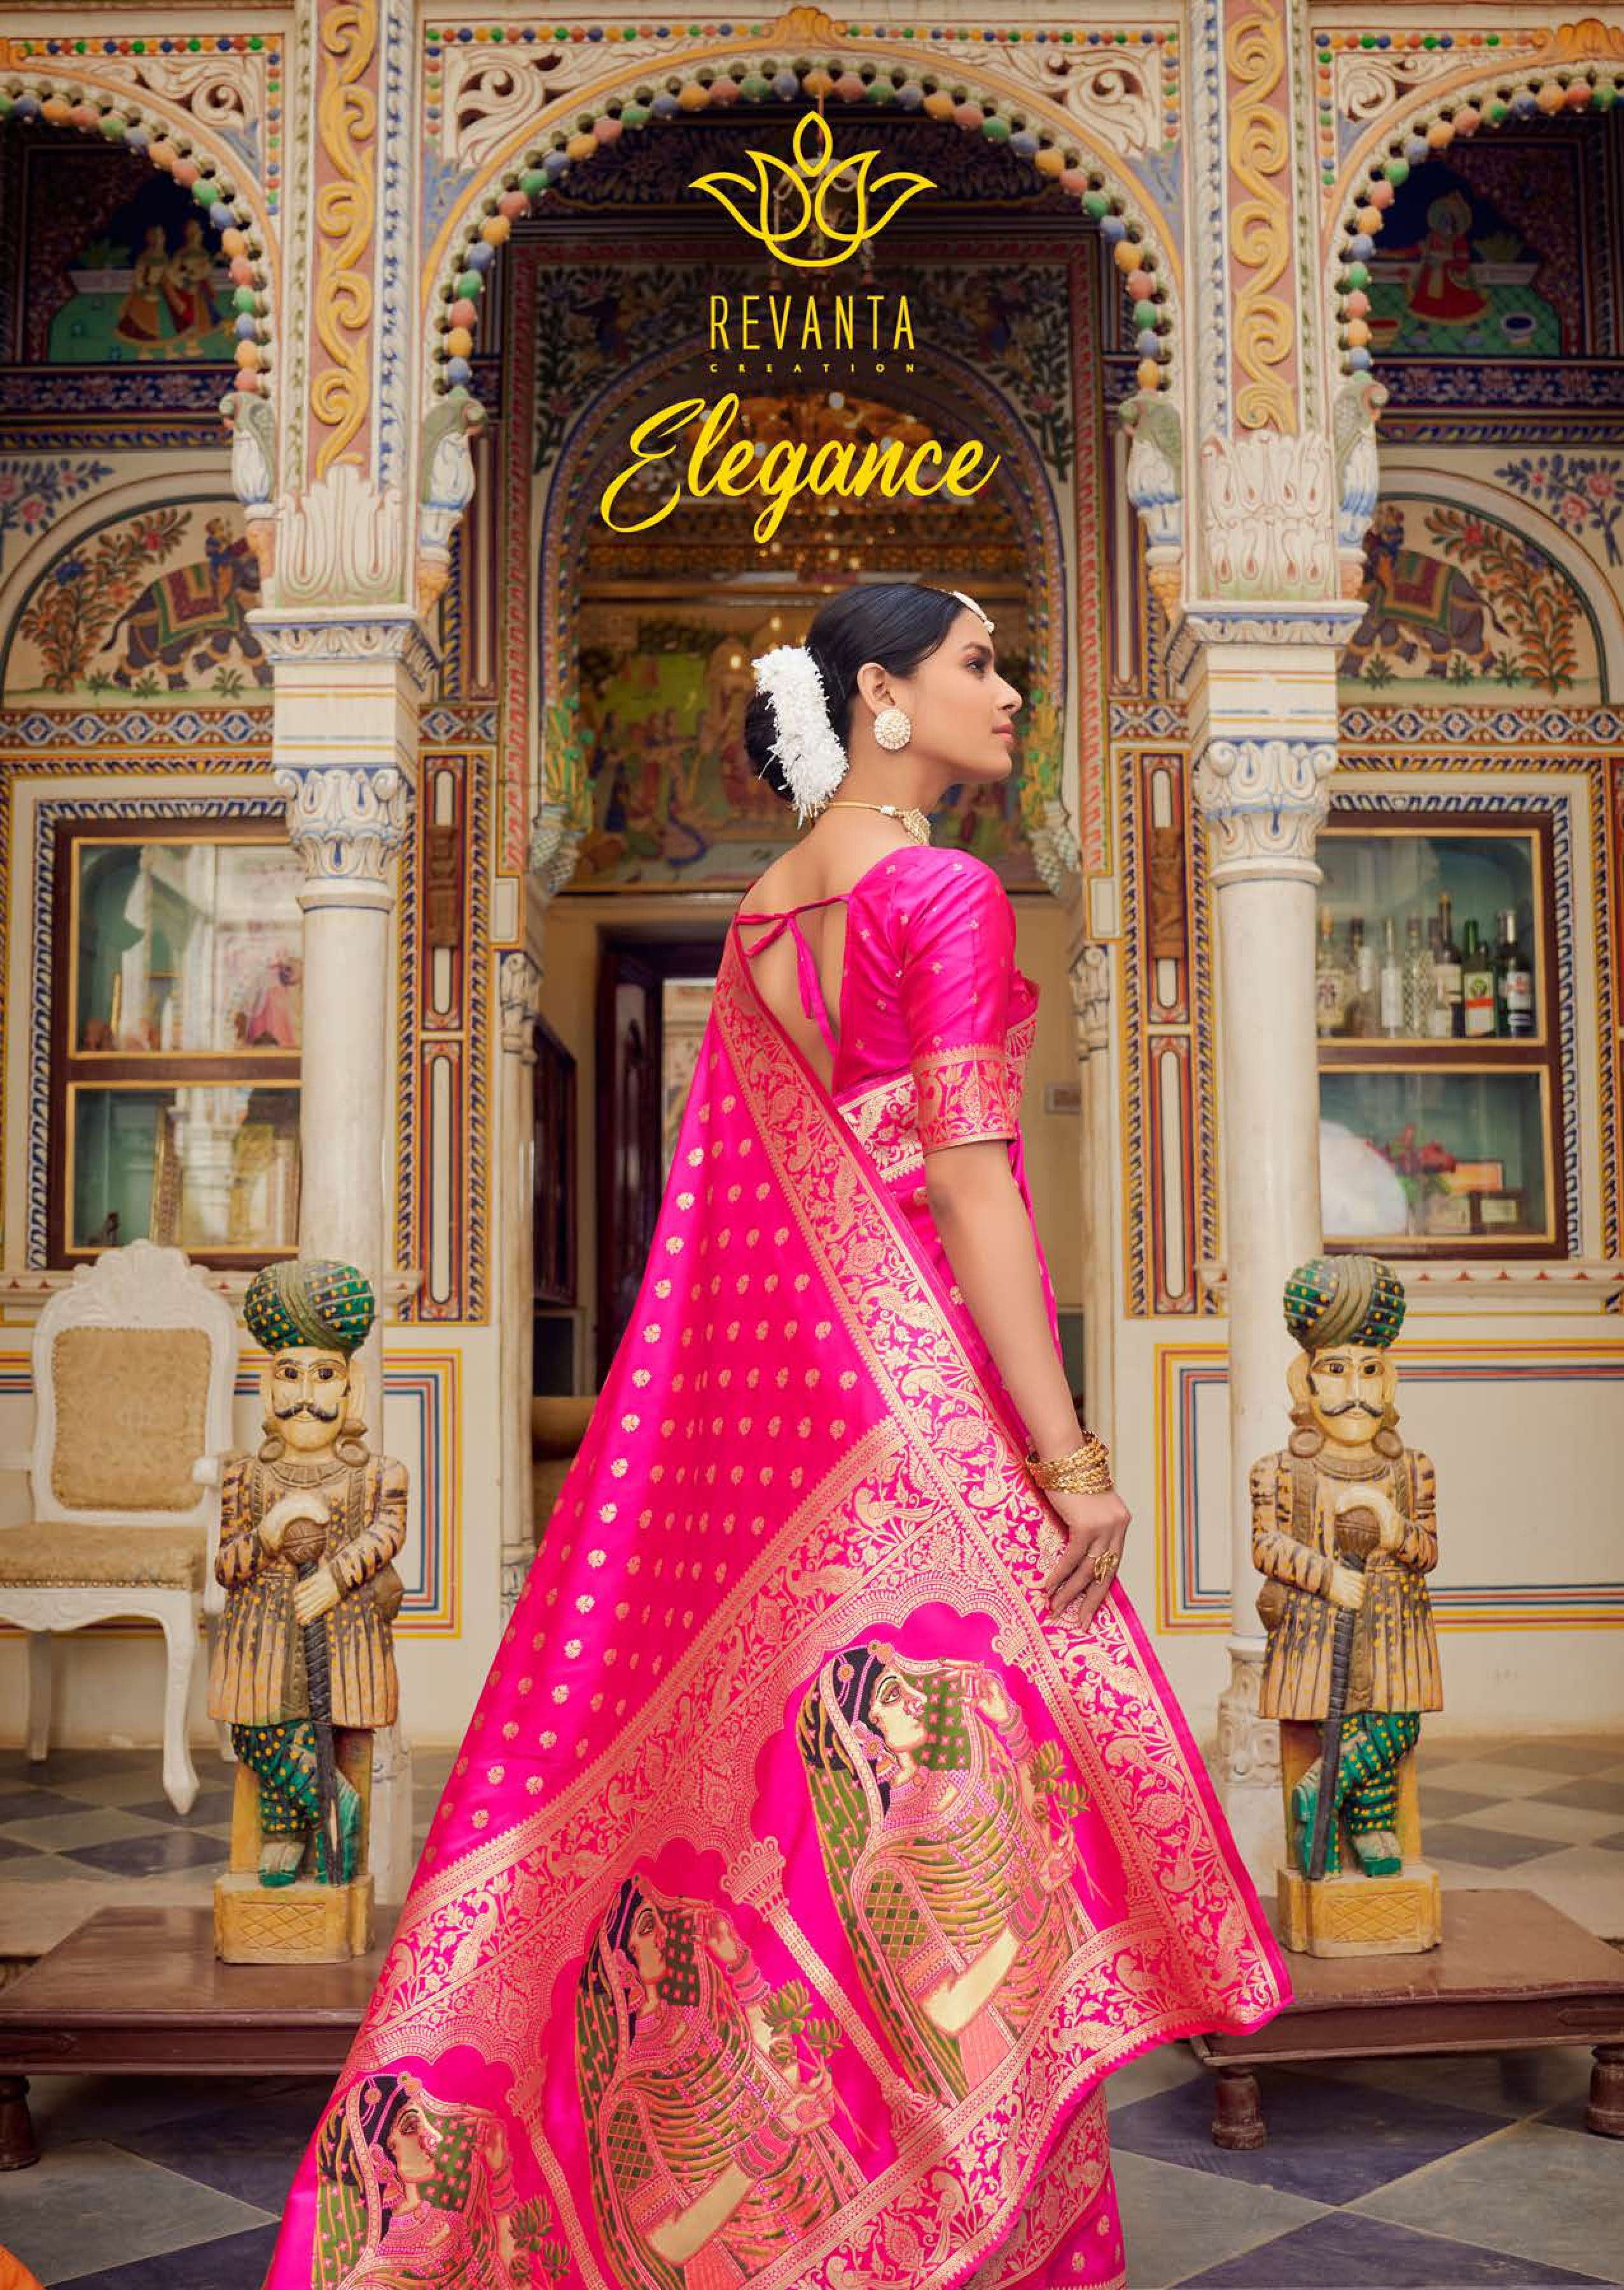 revanta elegance pure silk elegant look saris wholesale only 